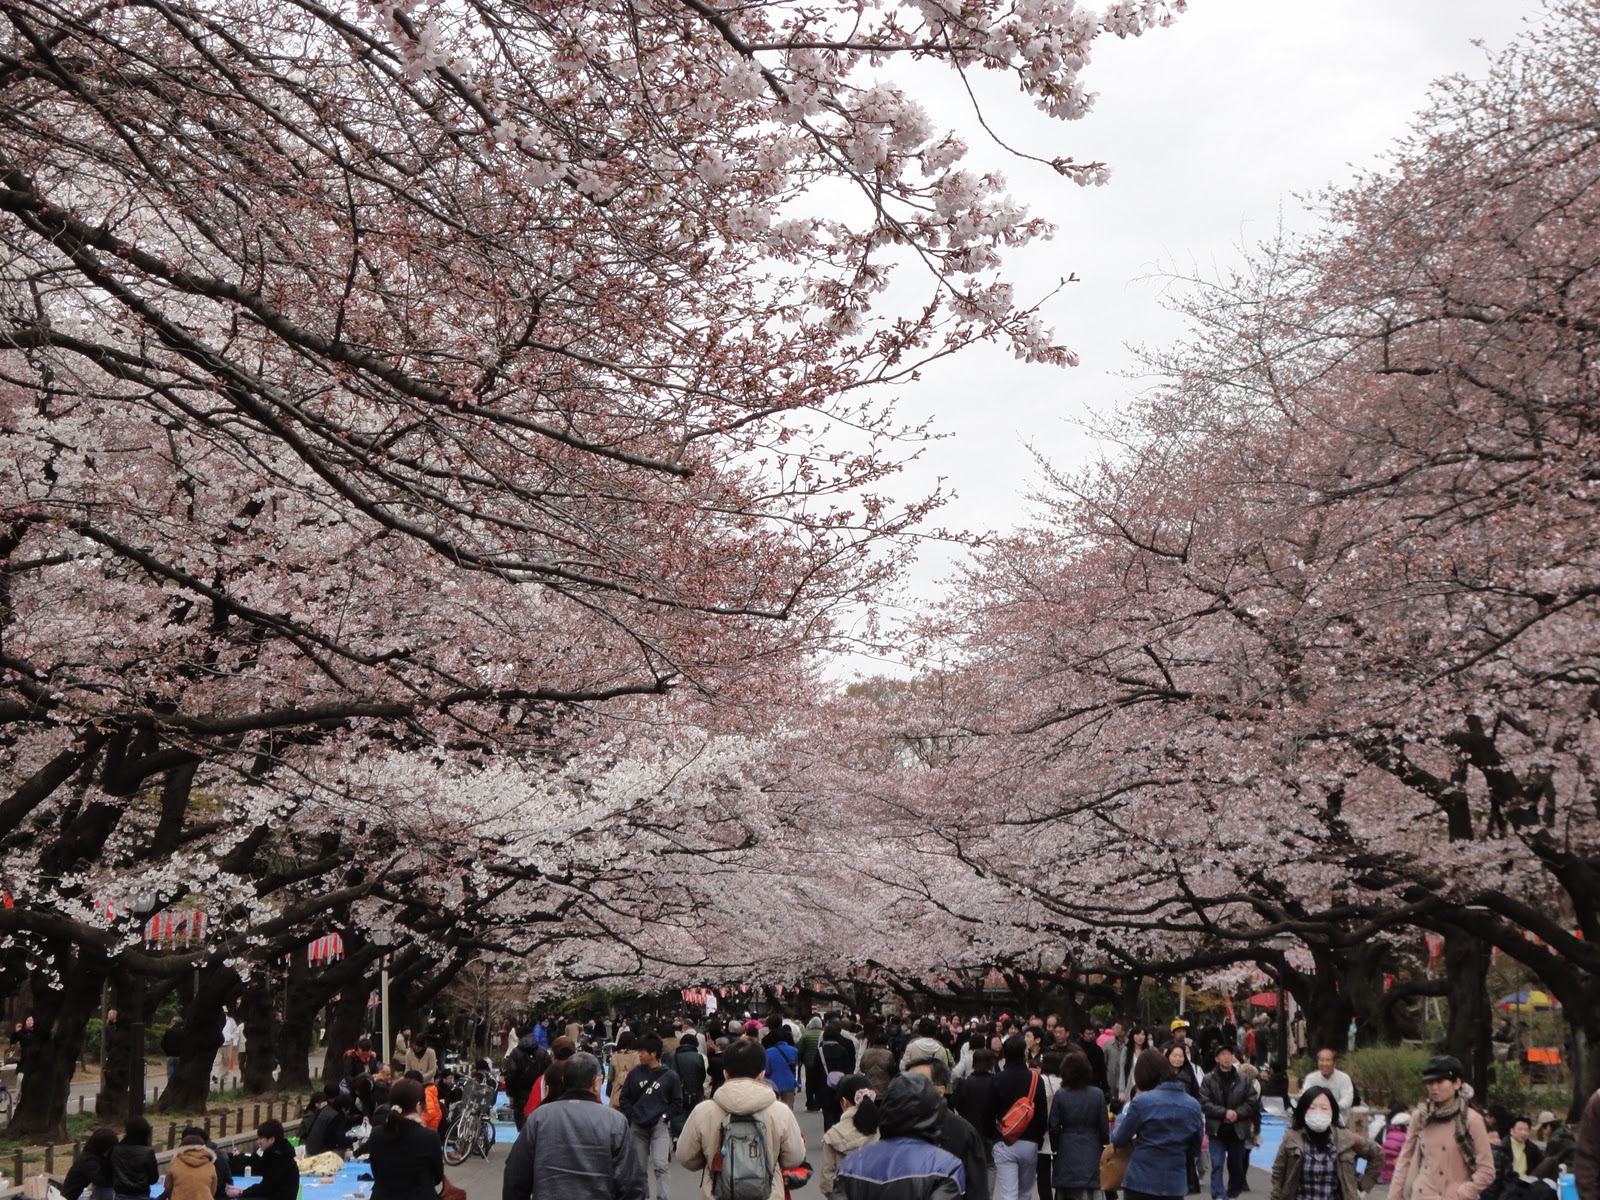 ueno park jadi salah satu lokasi paling terkenal dan ramai untuk menikmati pemandangan bunga sakura taman ini dipenuhi oleh kurang lebih 1000 pohon sakura